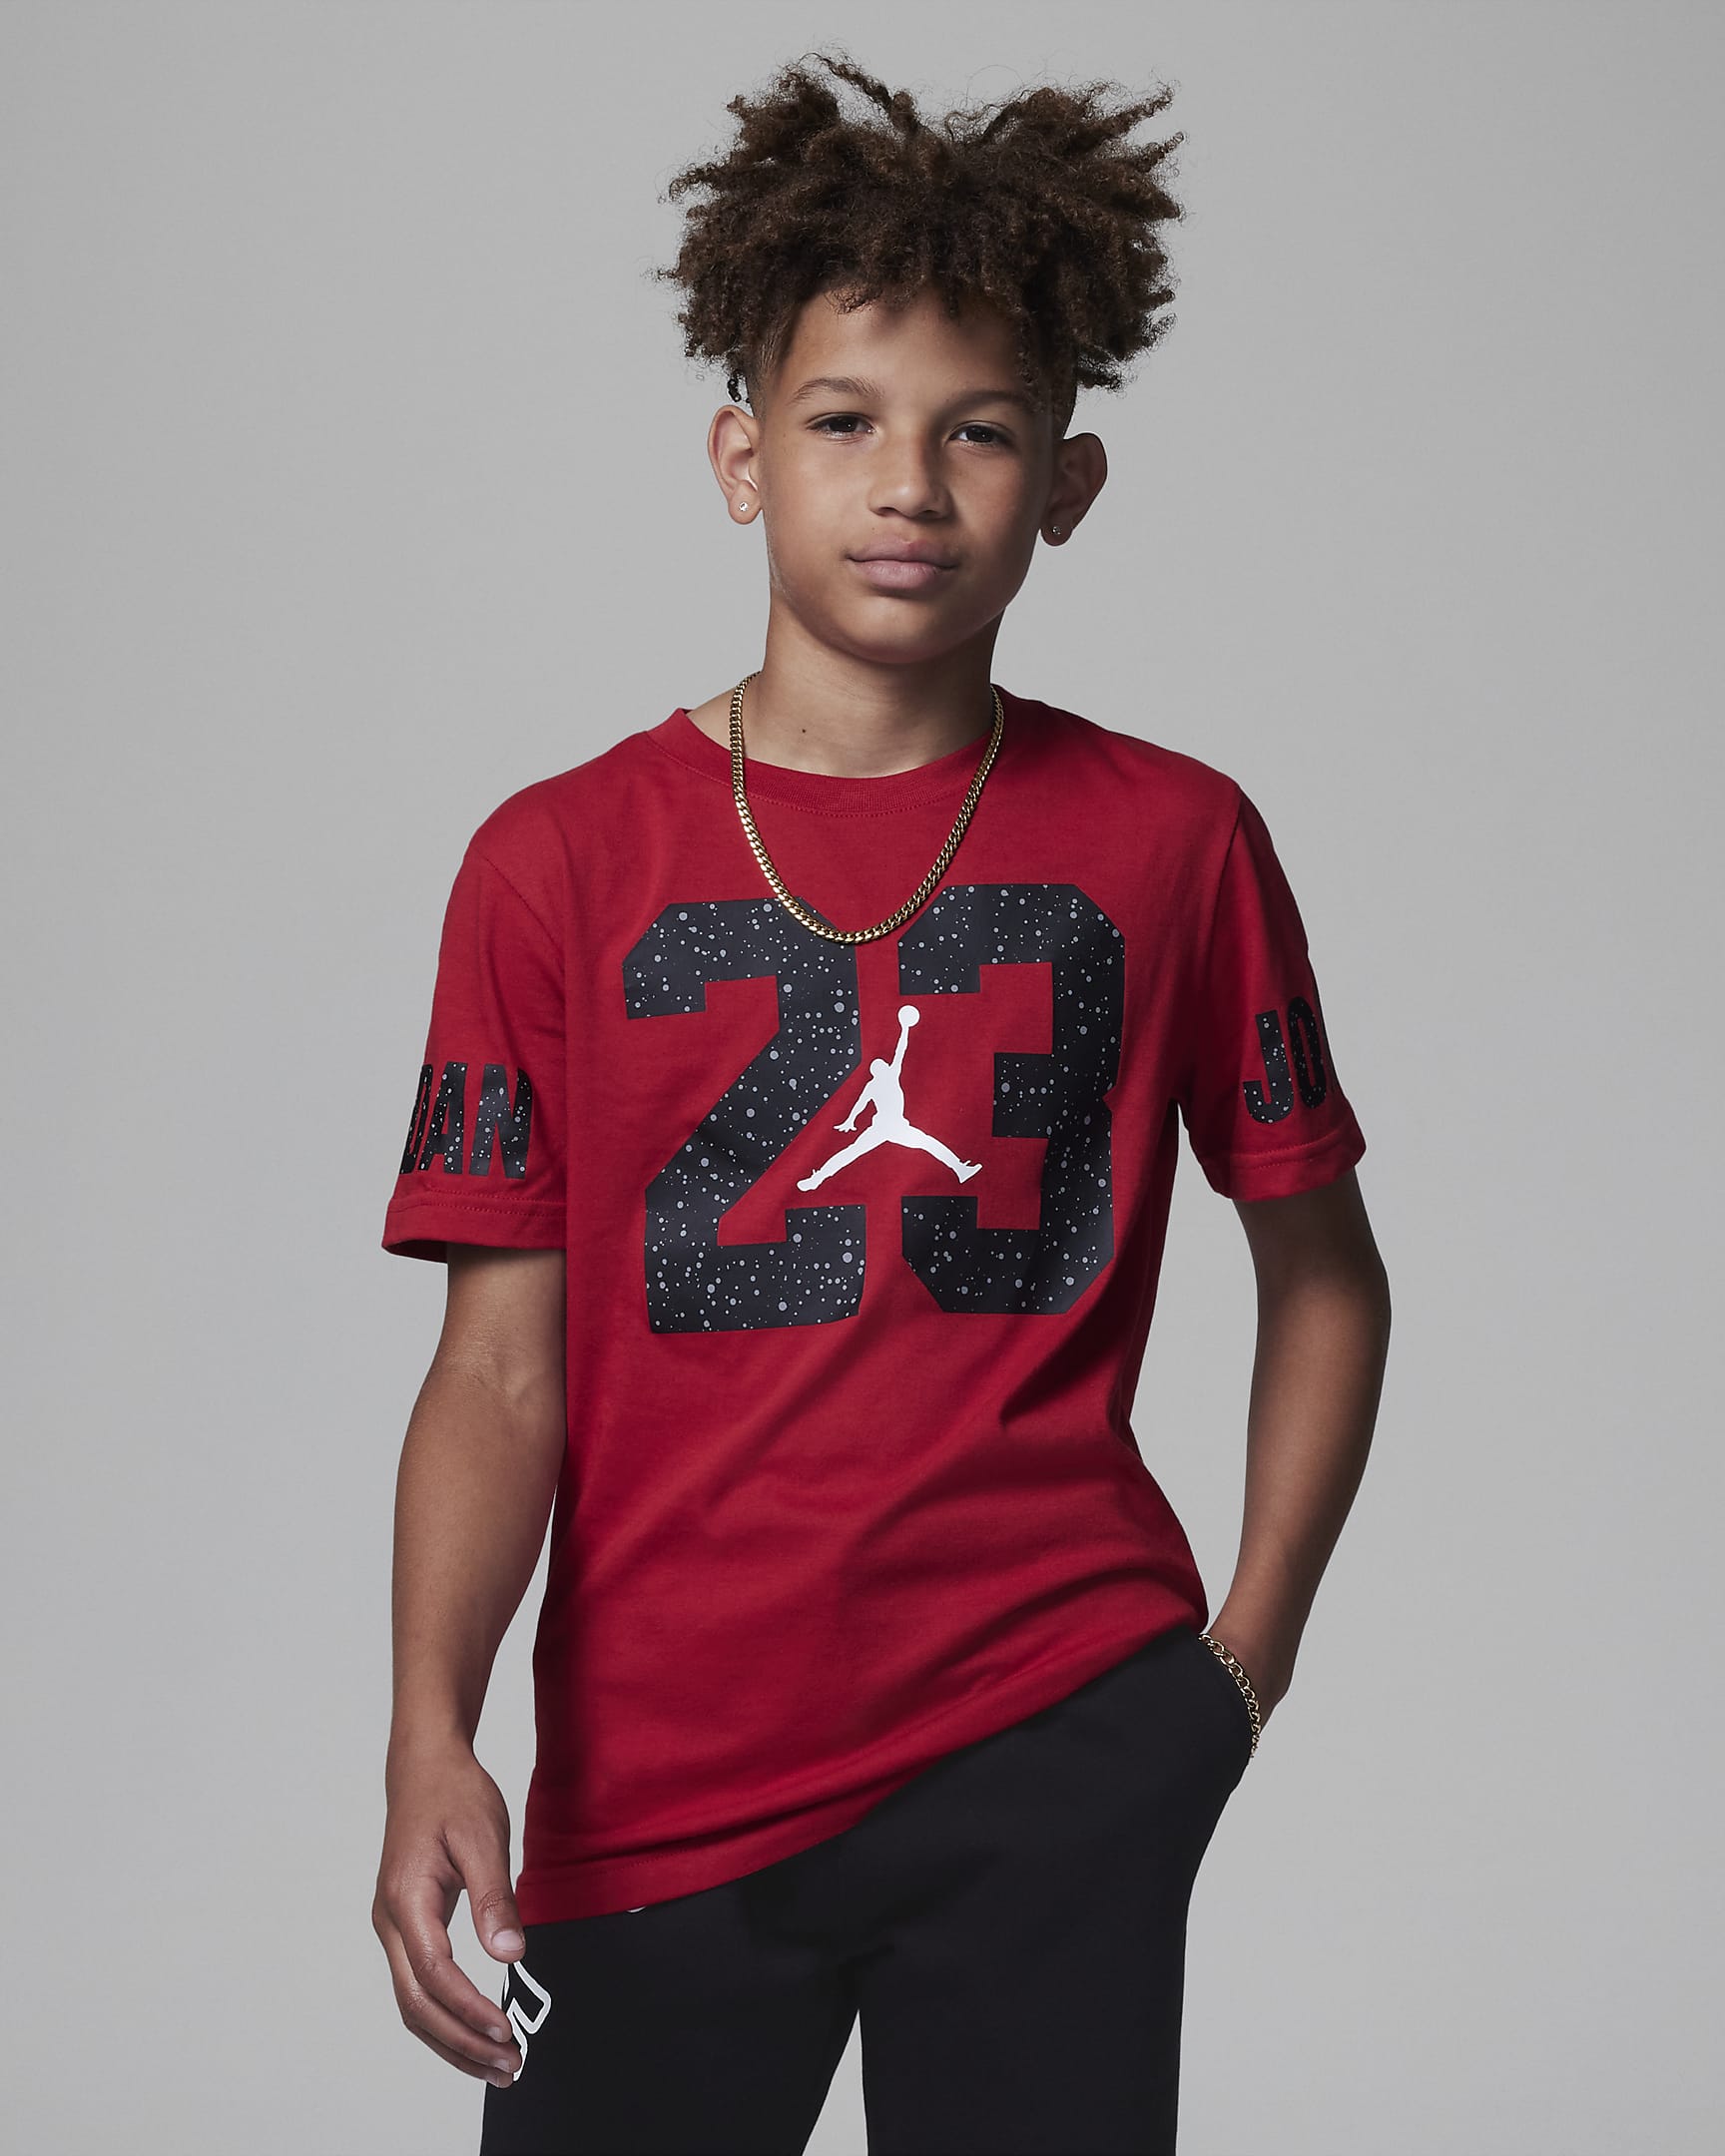 Jordan 23 Speckled Tee Older Kids' T-Shirt. Nike UK